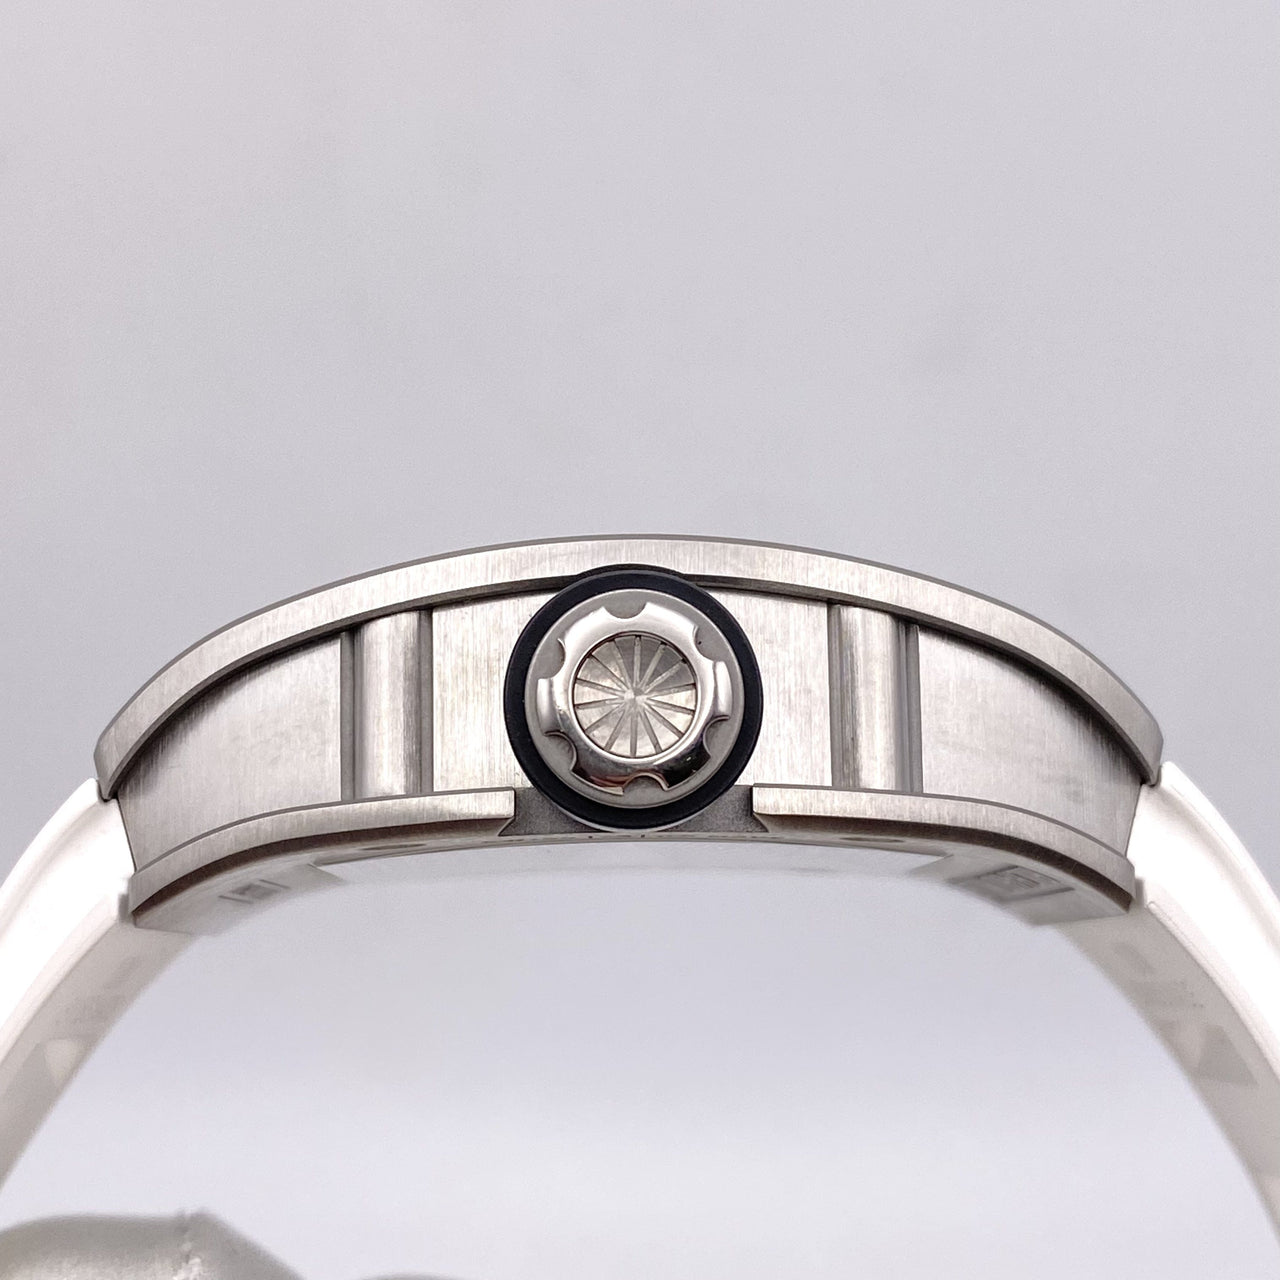 Luxury Watch Richard Mille Titanium Oversized Date RM029 Wrist Aficionado